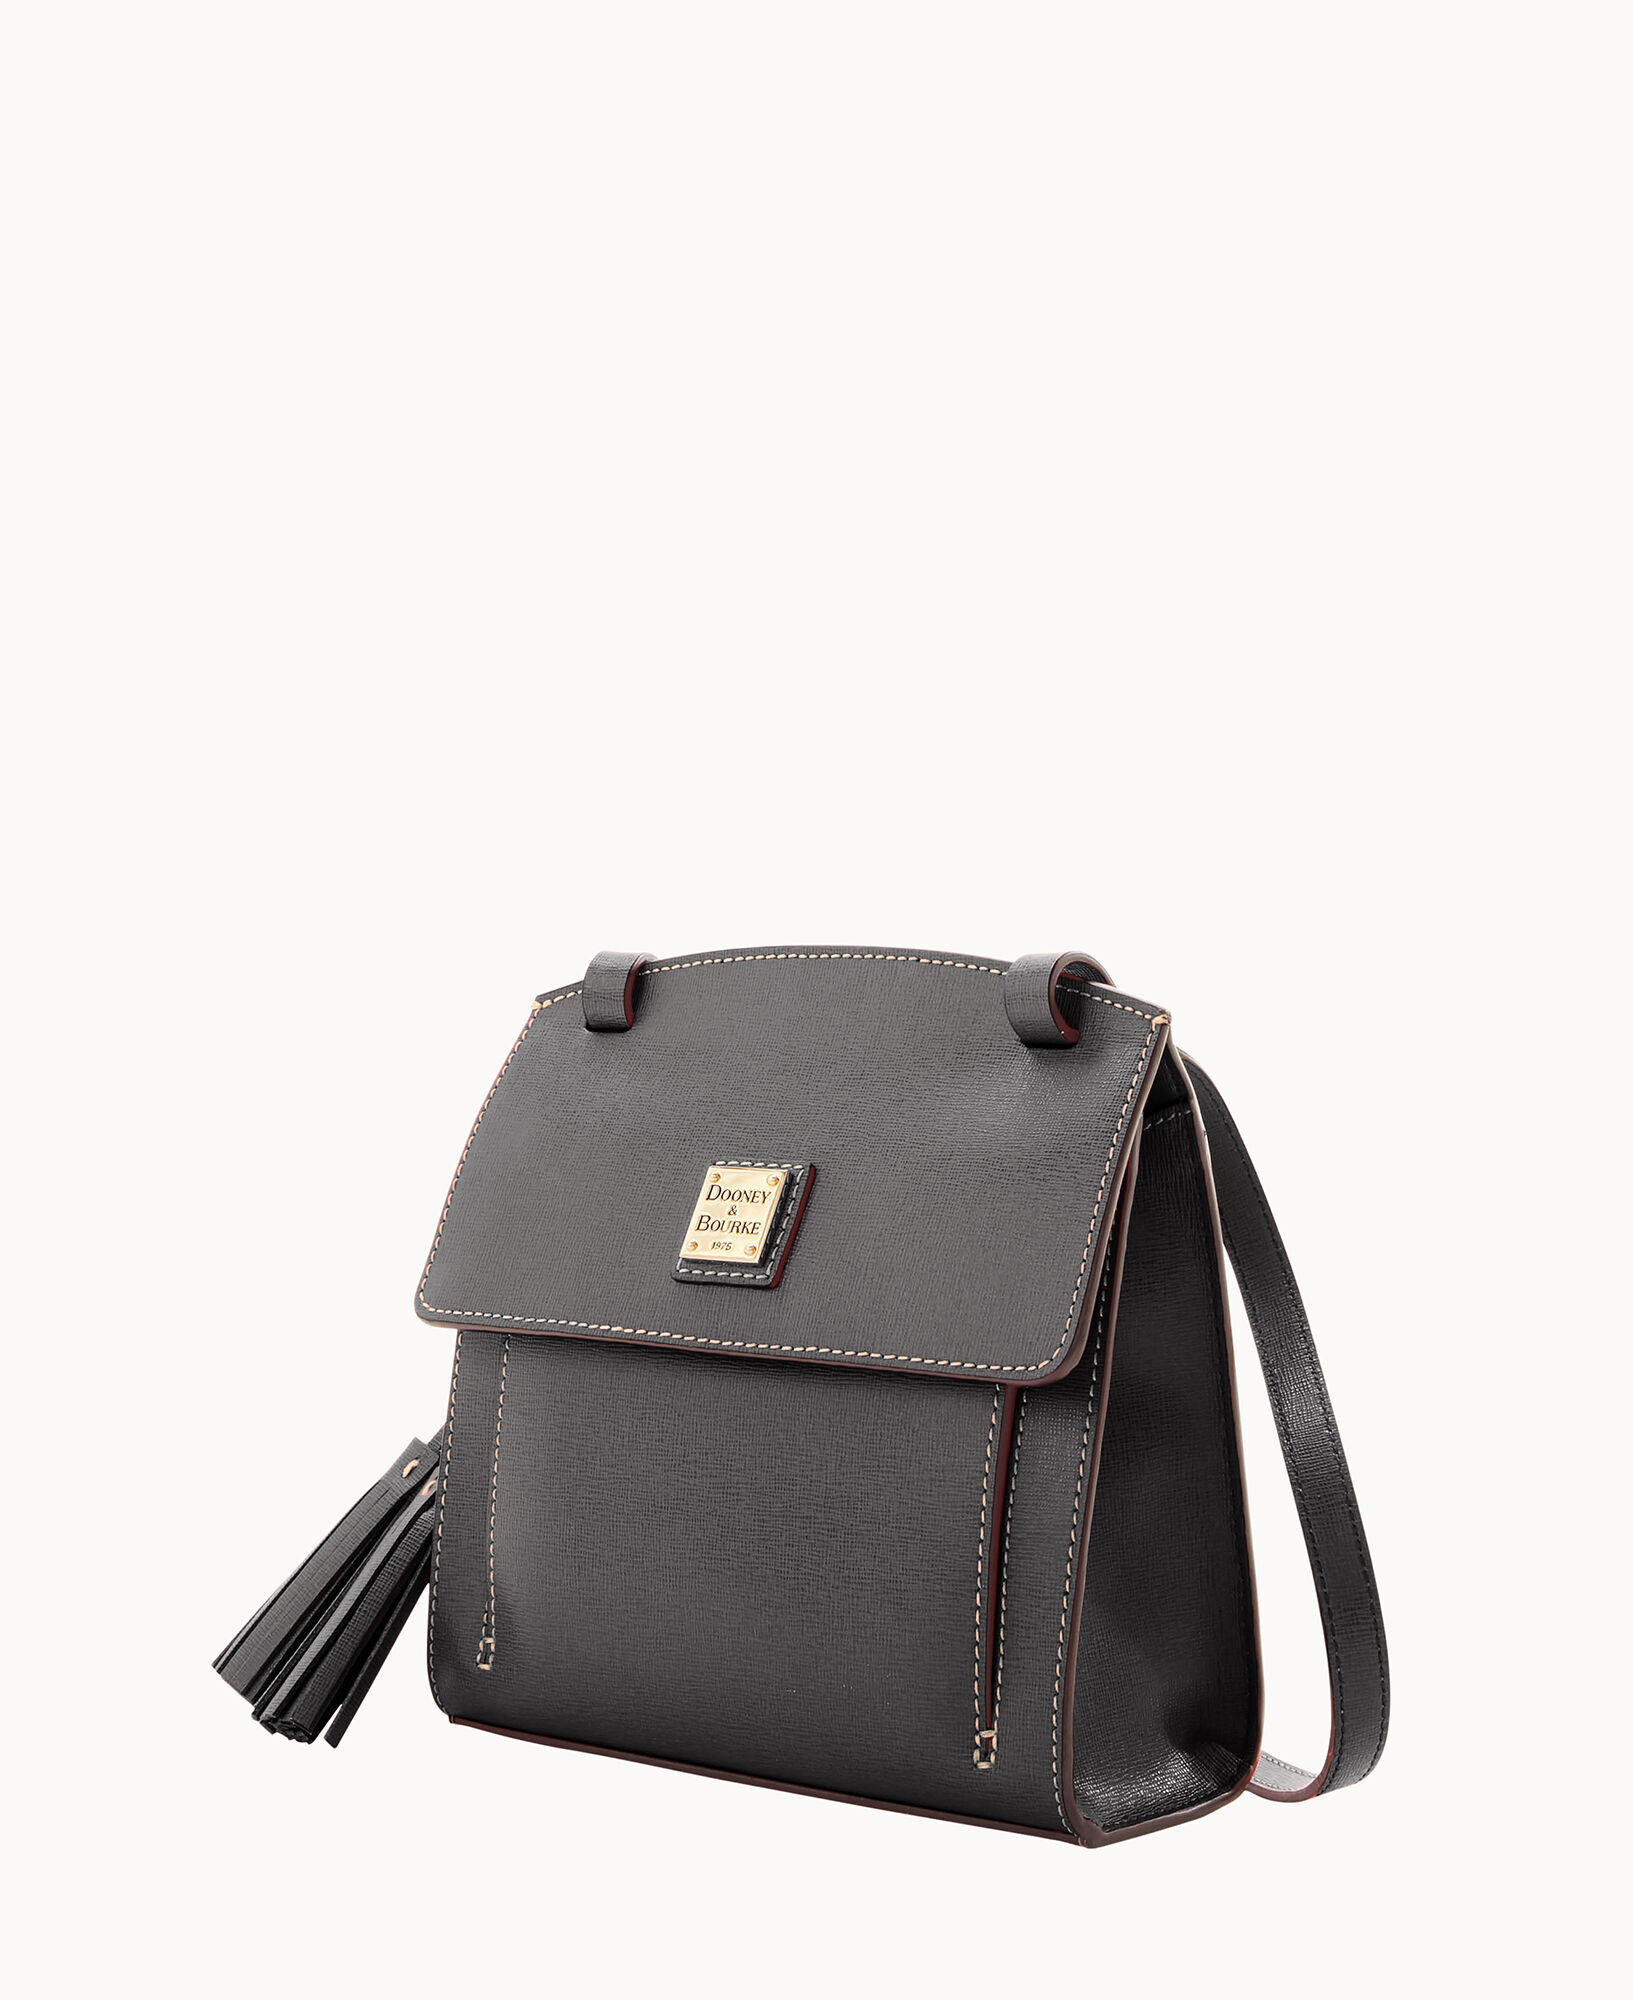 Dooney & Bourke Handbag, Saffiano Small Zip Crossbody